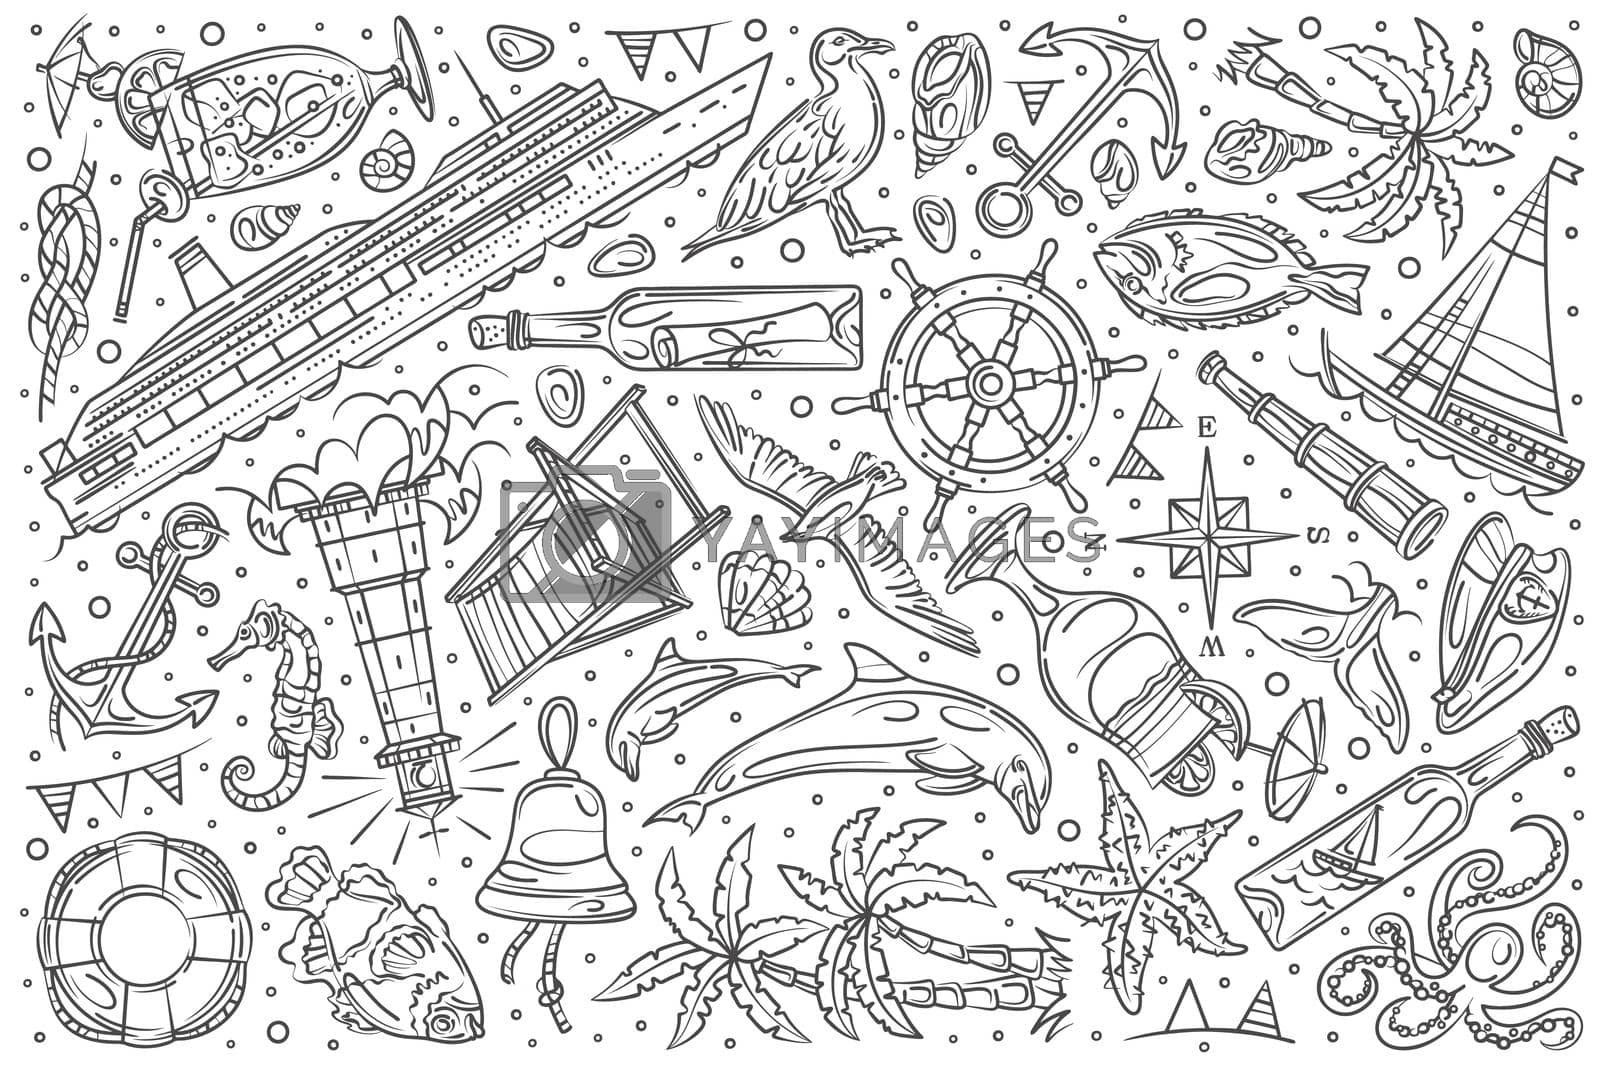 Hand drawn ship cruise set doodle vector illustration background